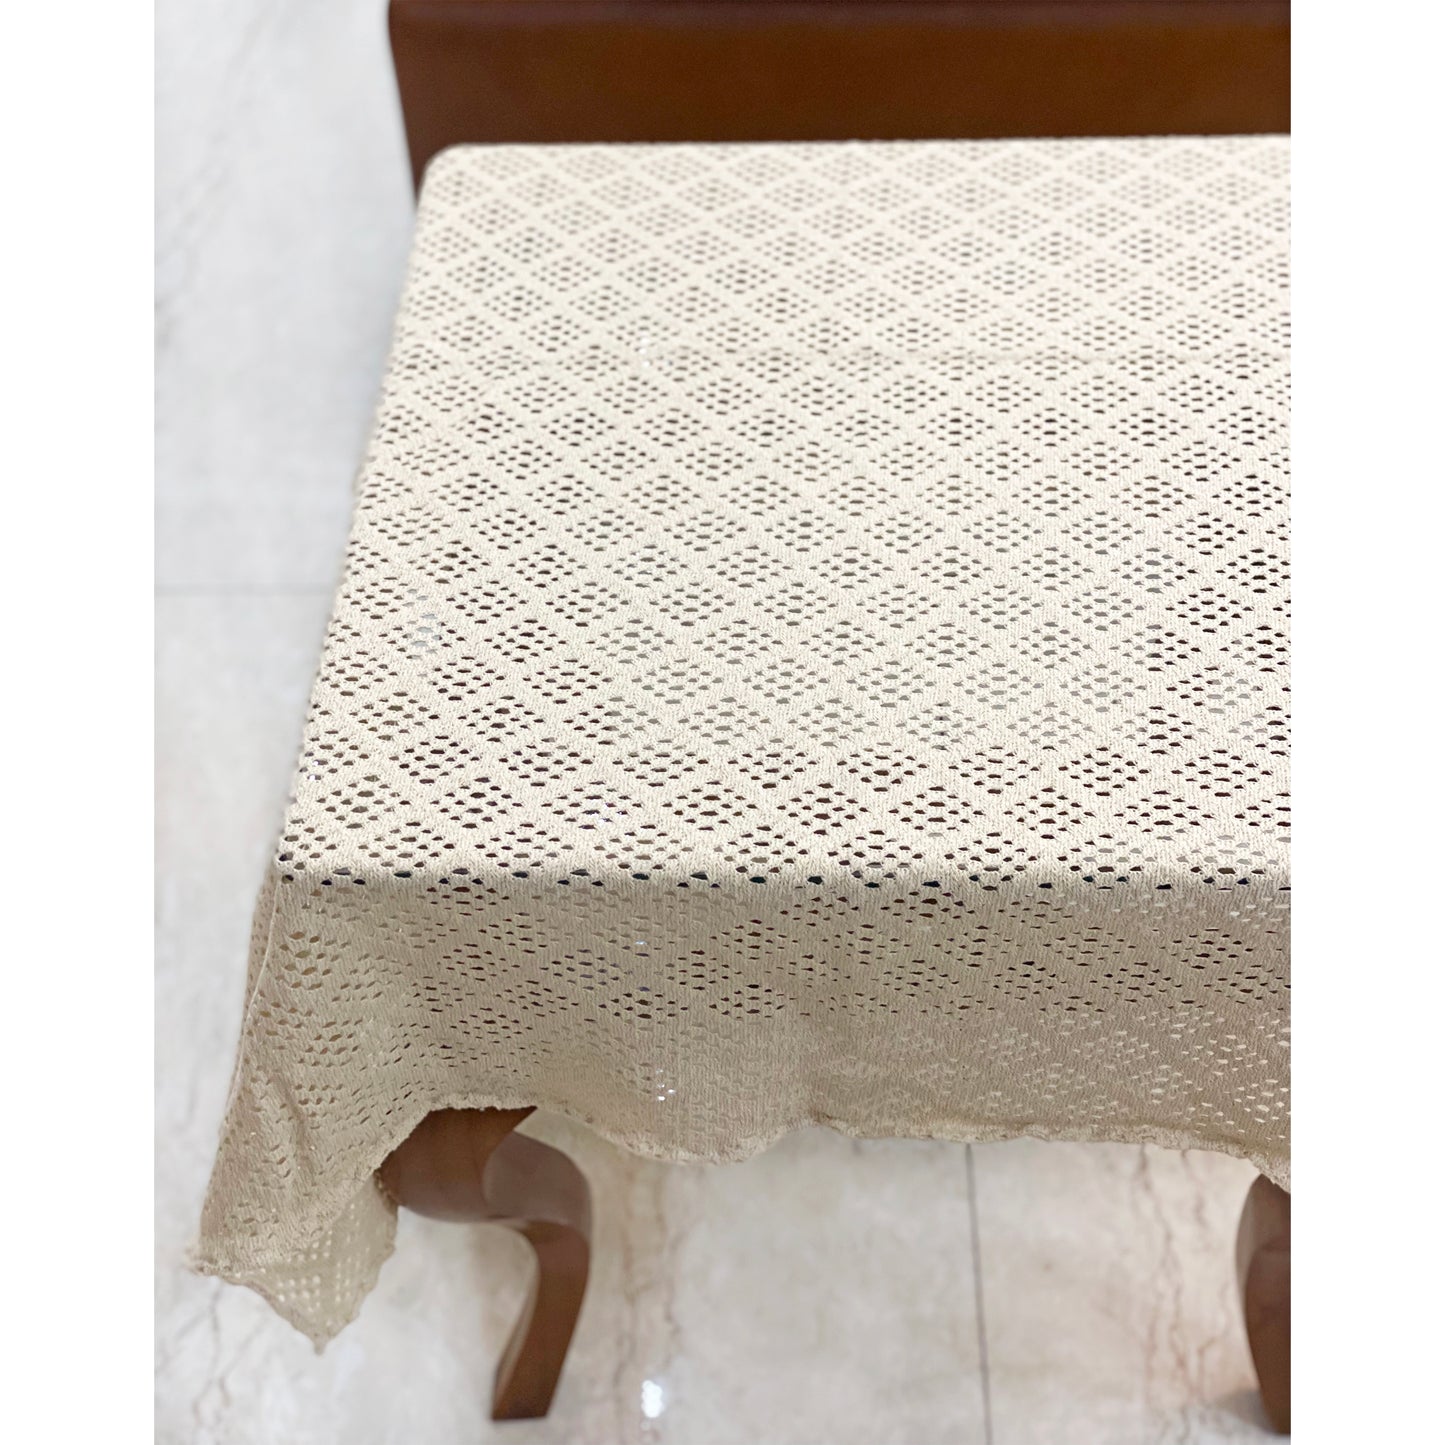 white-crochet-table-cover-india-online